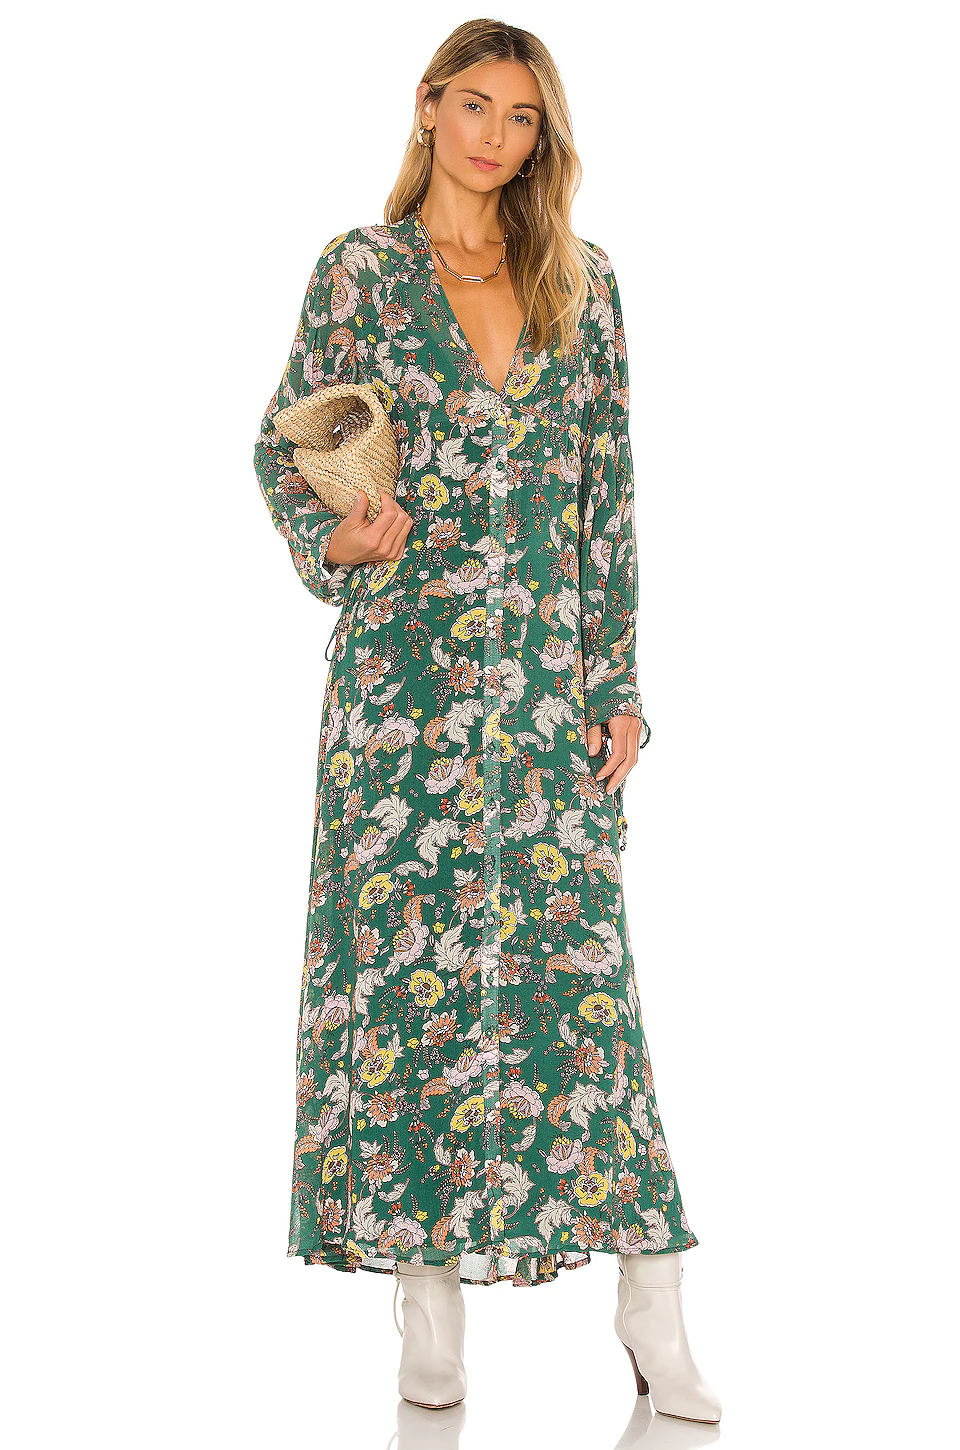 Vestido verde largo de manga larga con estampado de flores (185 euros).